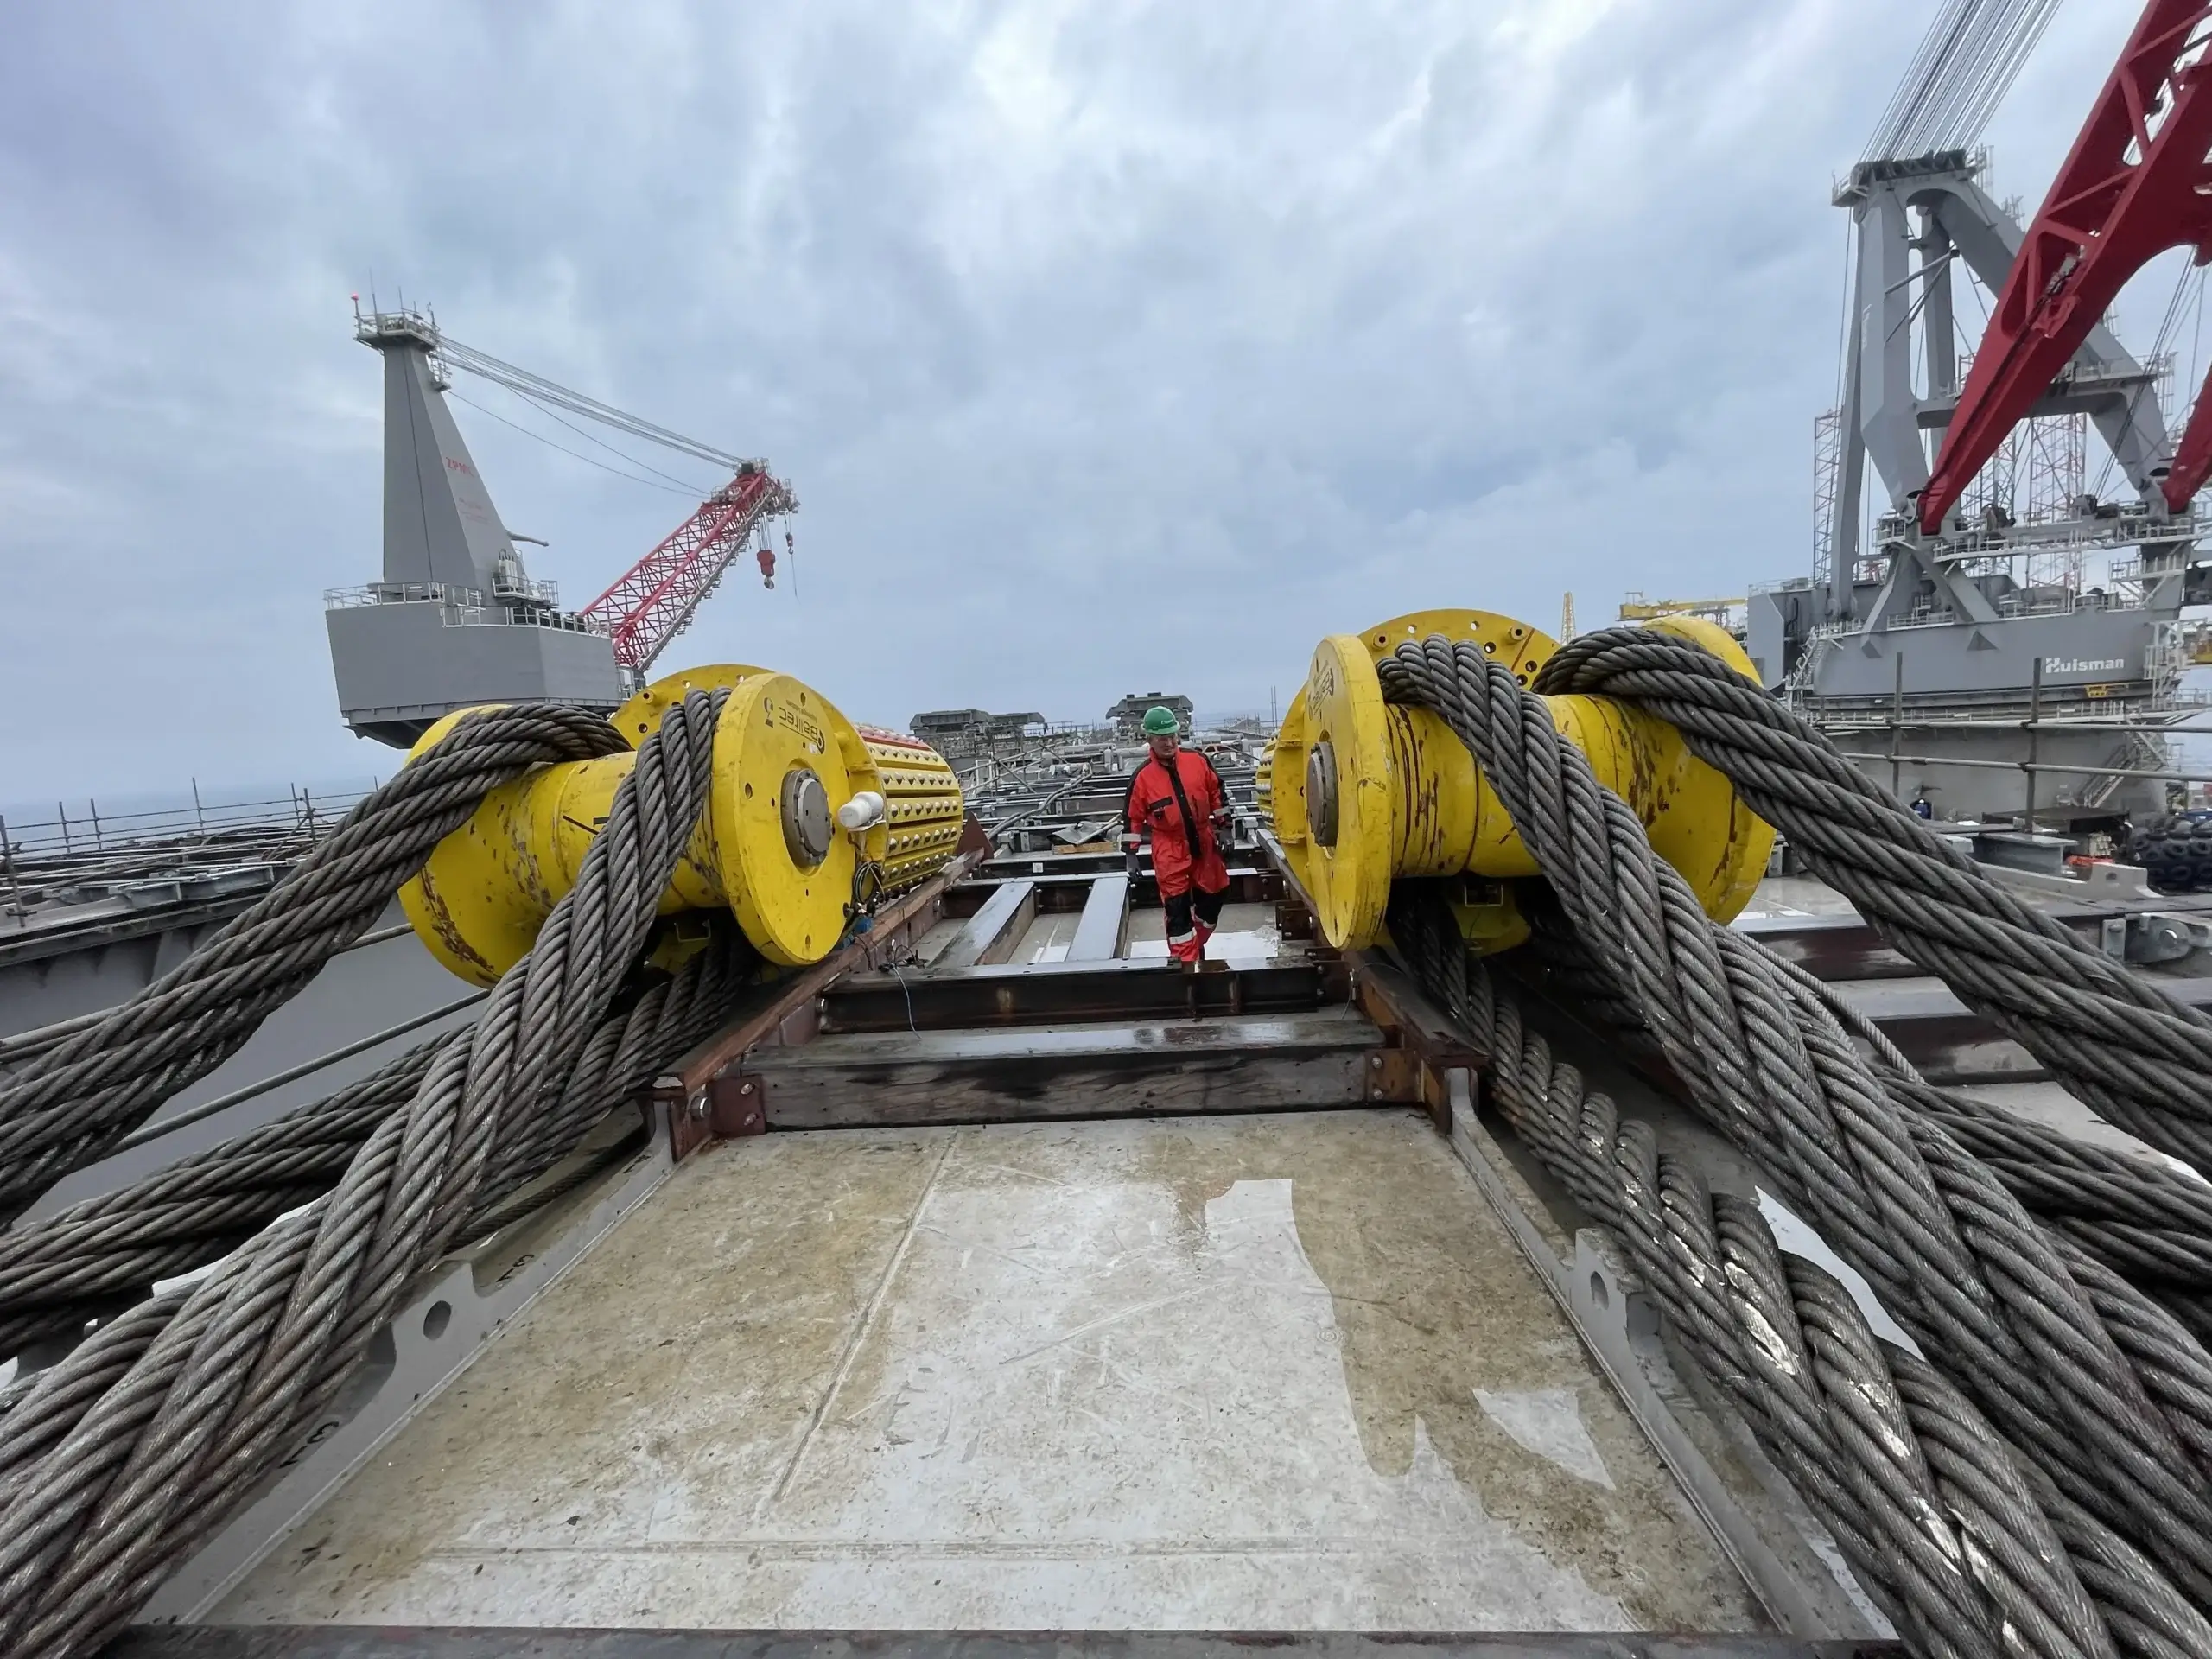 LiftLOK, 3000 mT, connector, decommissioning, Allseas Pioneering Spirit, oil platform jackets